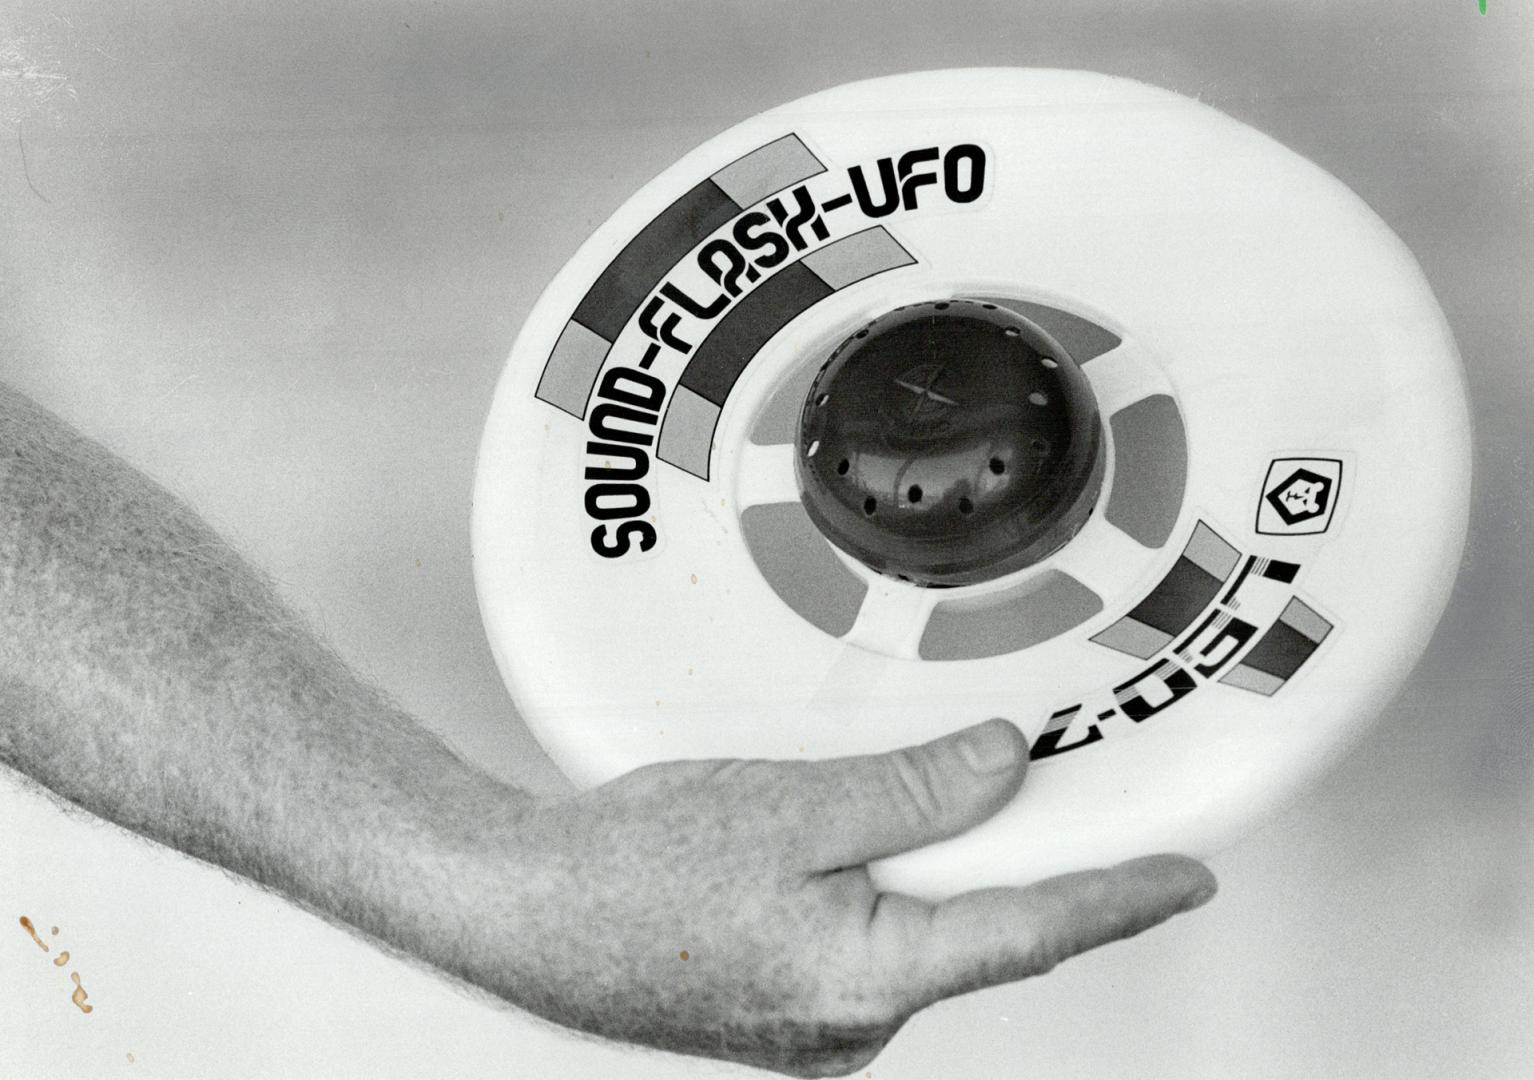 Sound-Flash UFO